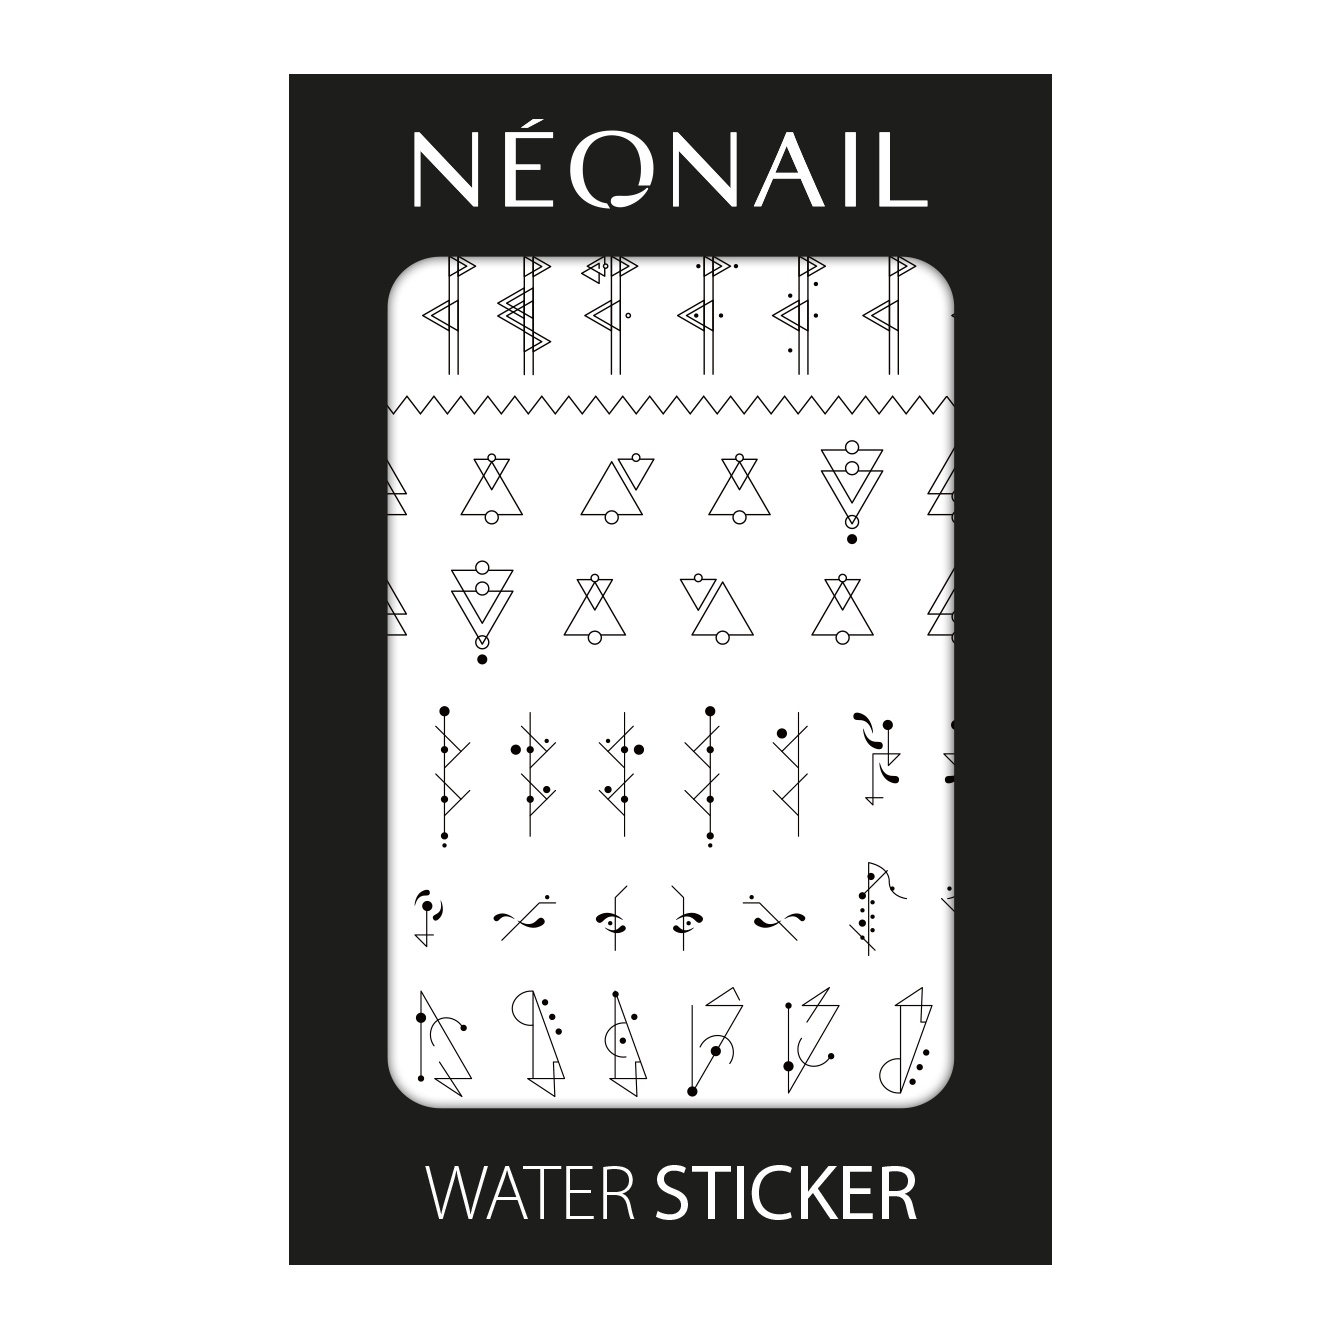 Naklejki wodne – water sticker – NN02